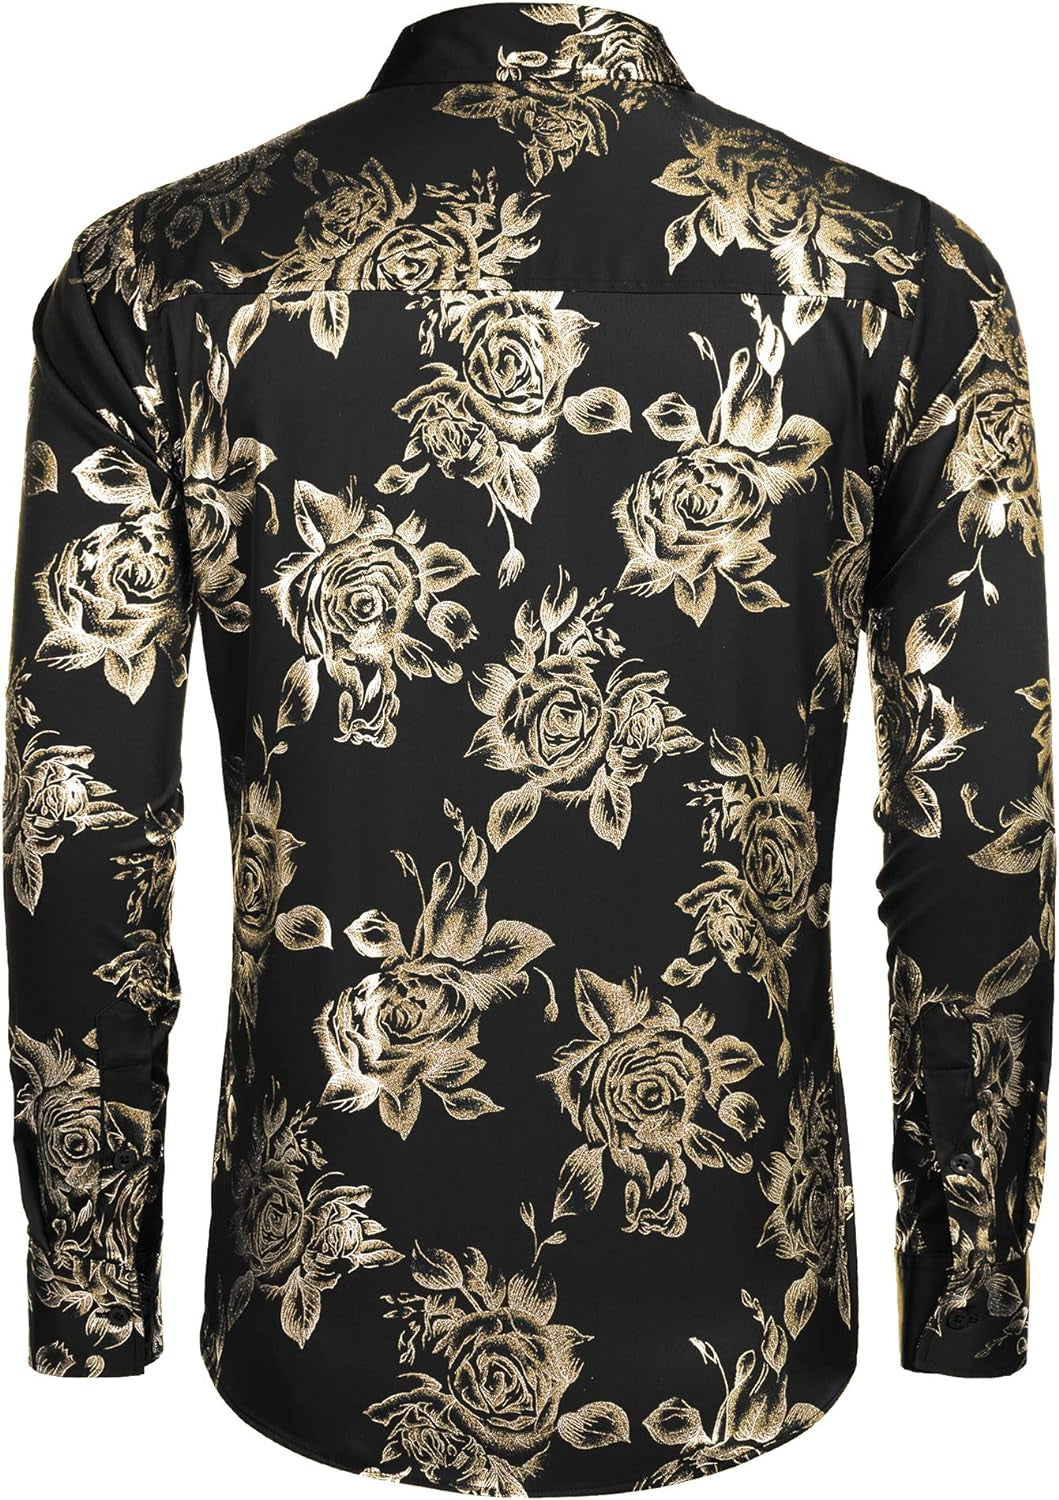 Men's Rose Shiny Shirt Luxury Flowered Printed Button down Shirt